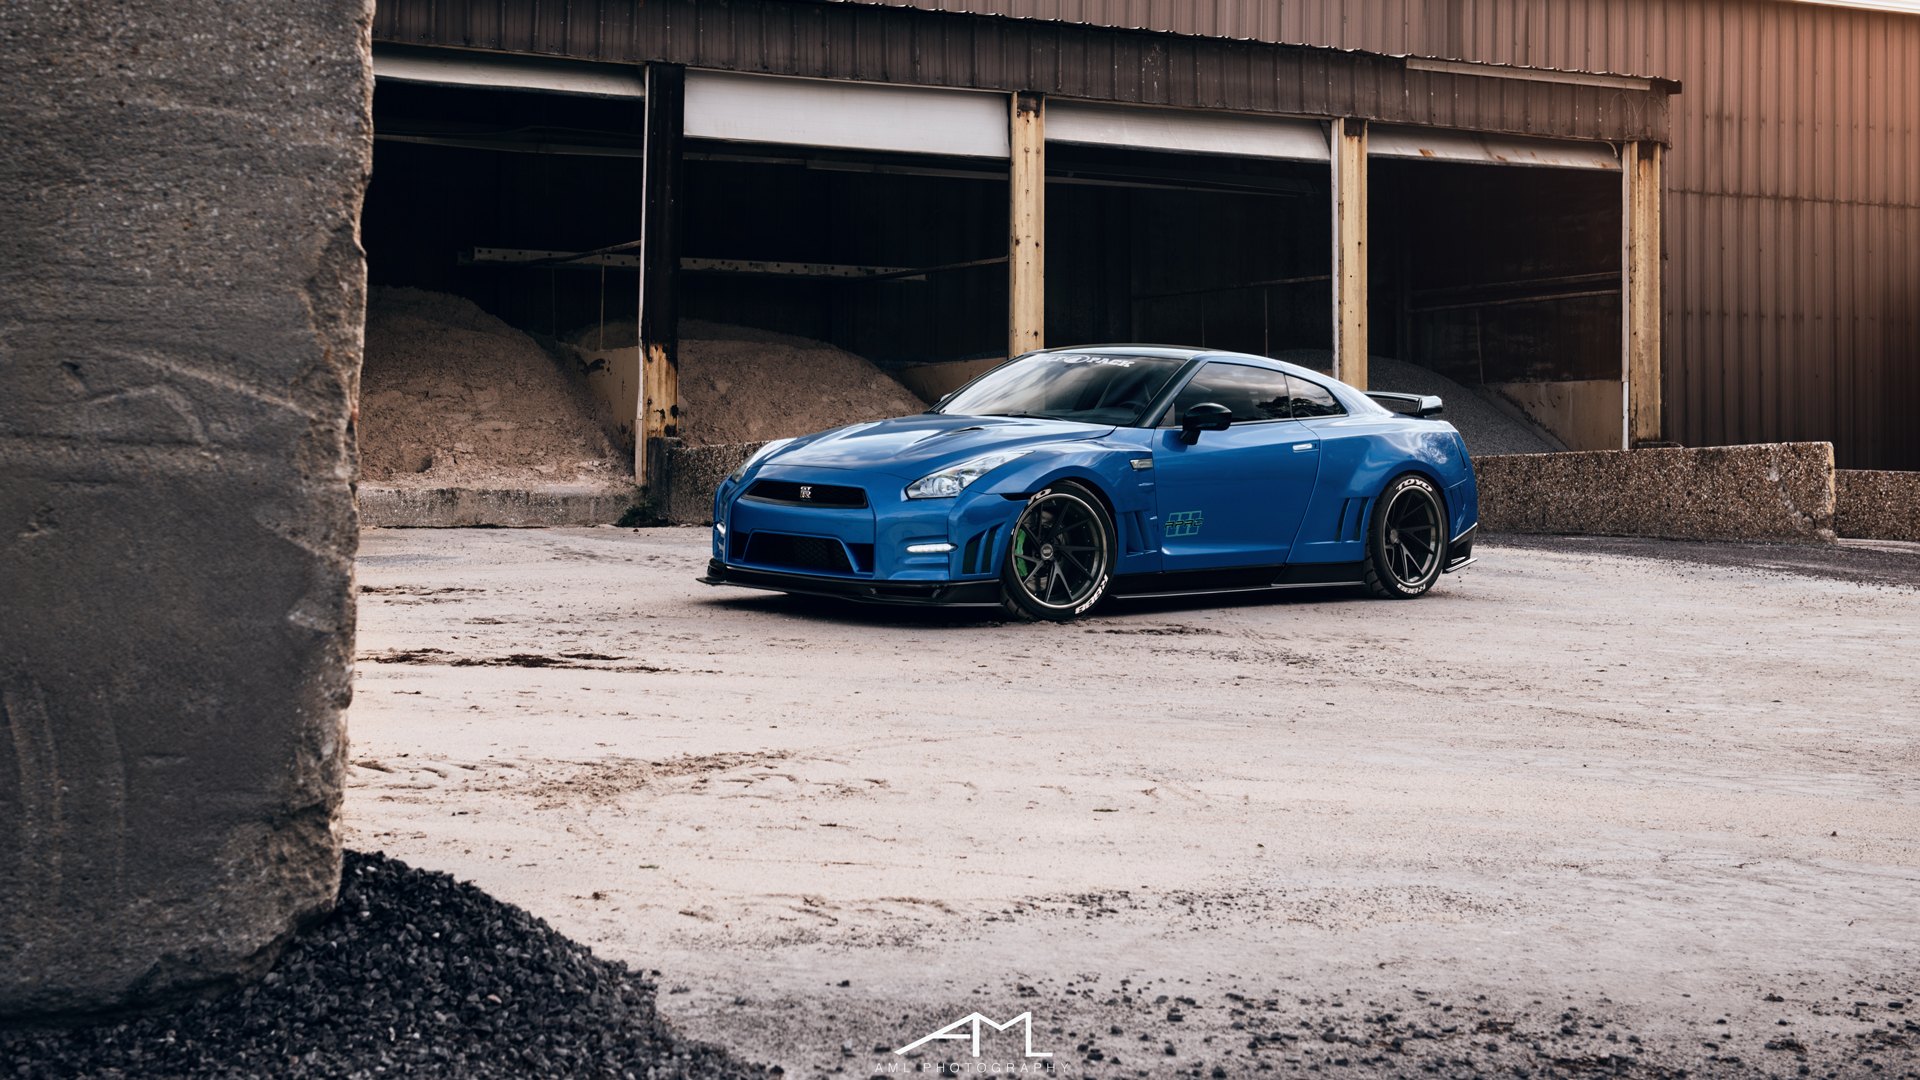 Matte Black Custom Wheels on Blue Stanced Nissan GT-R - Photo by Arlen Liverman